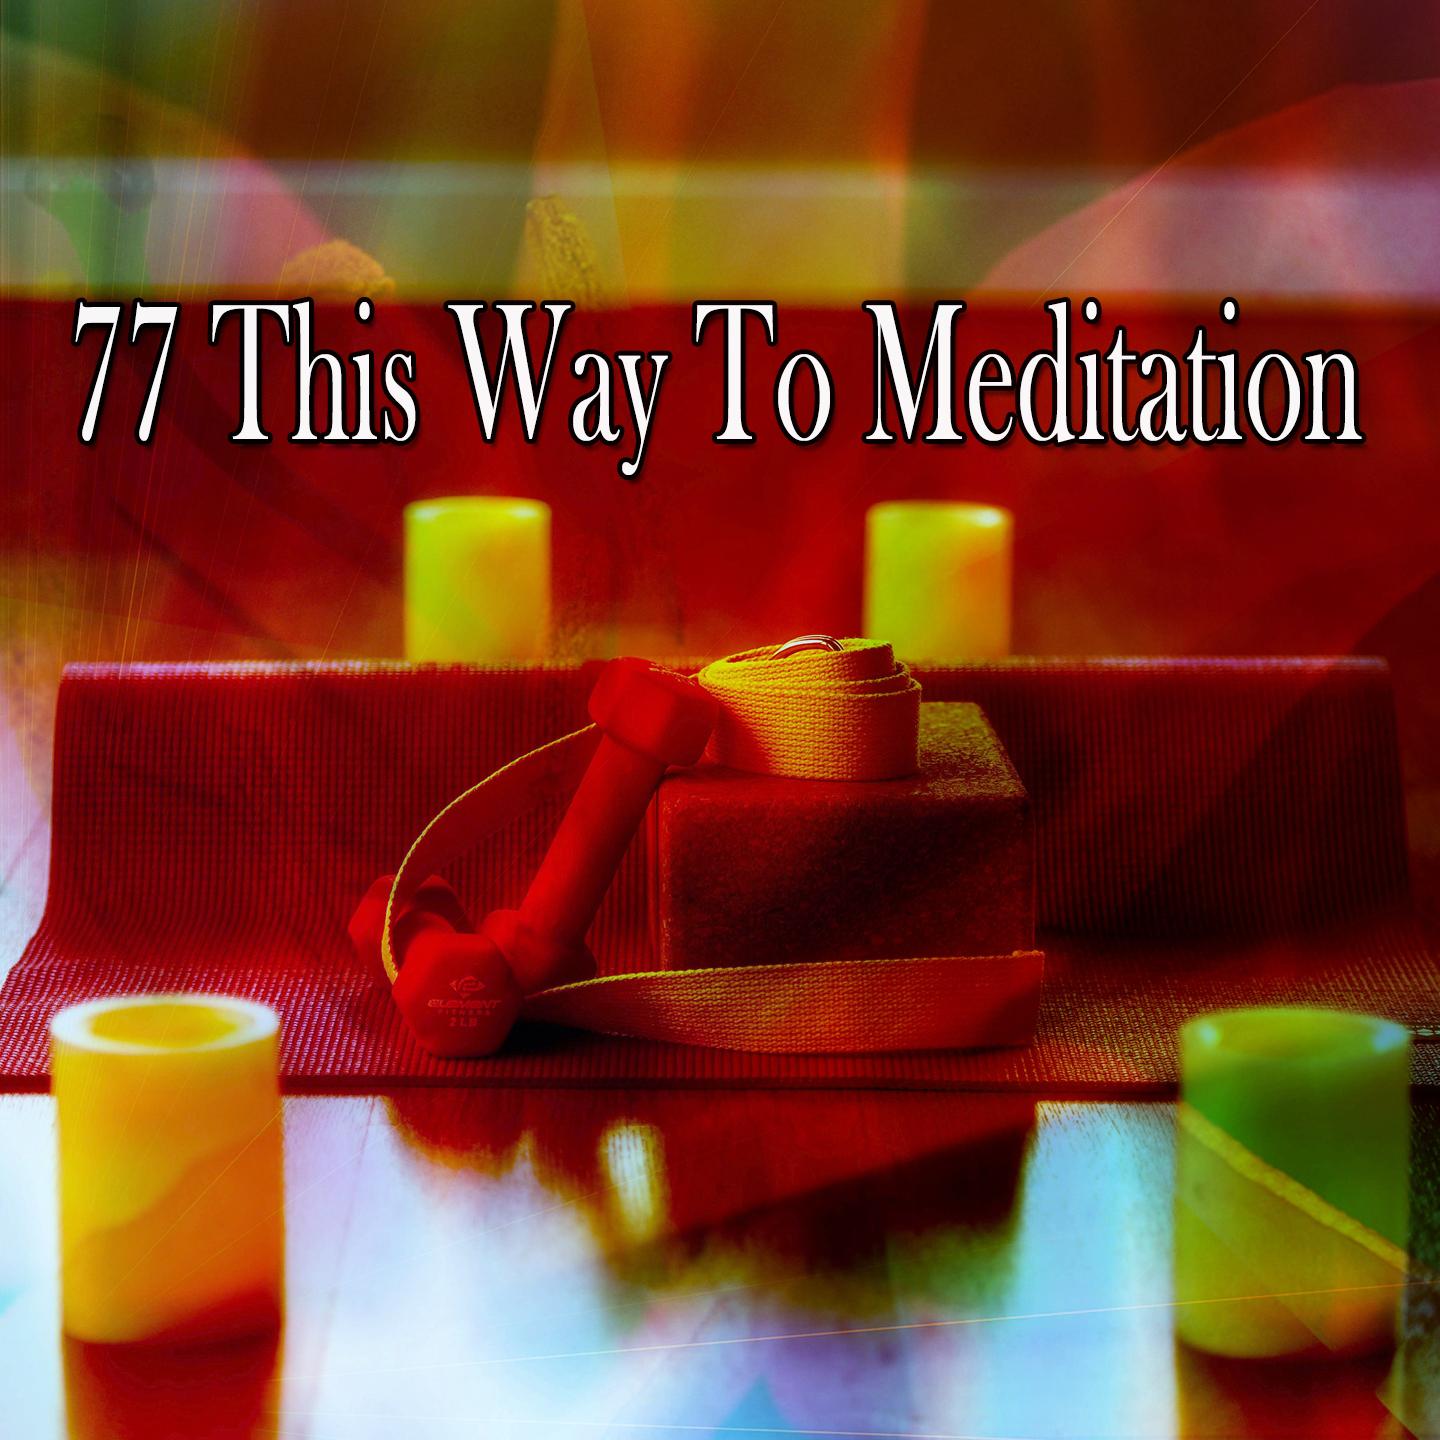 77 This Way to Meditation